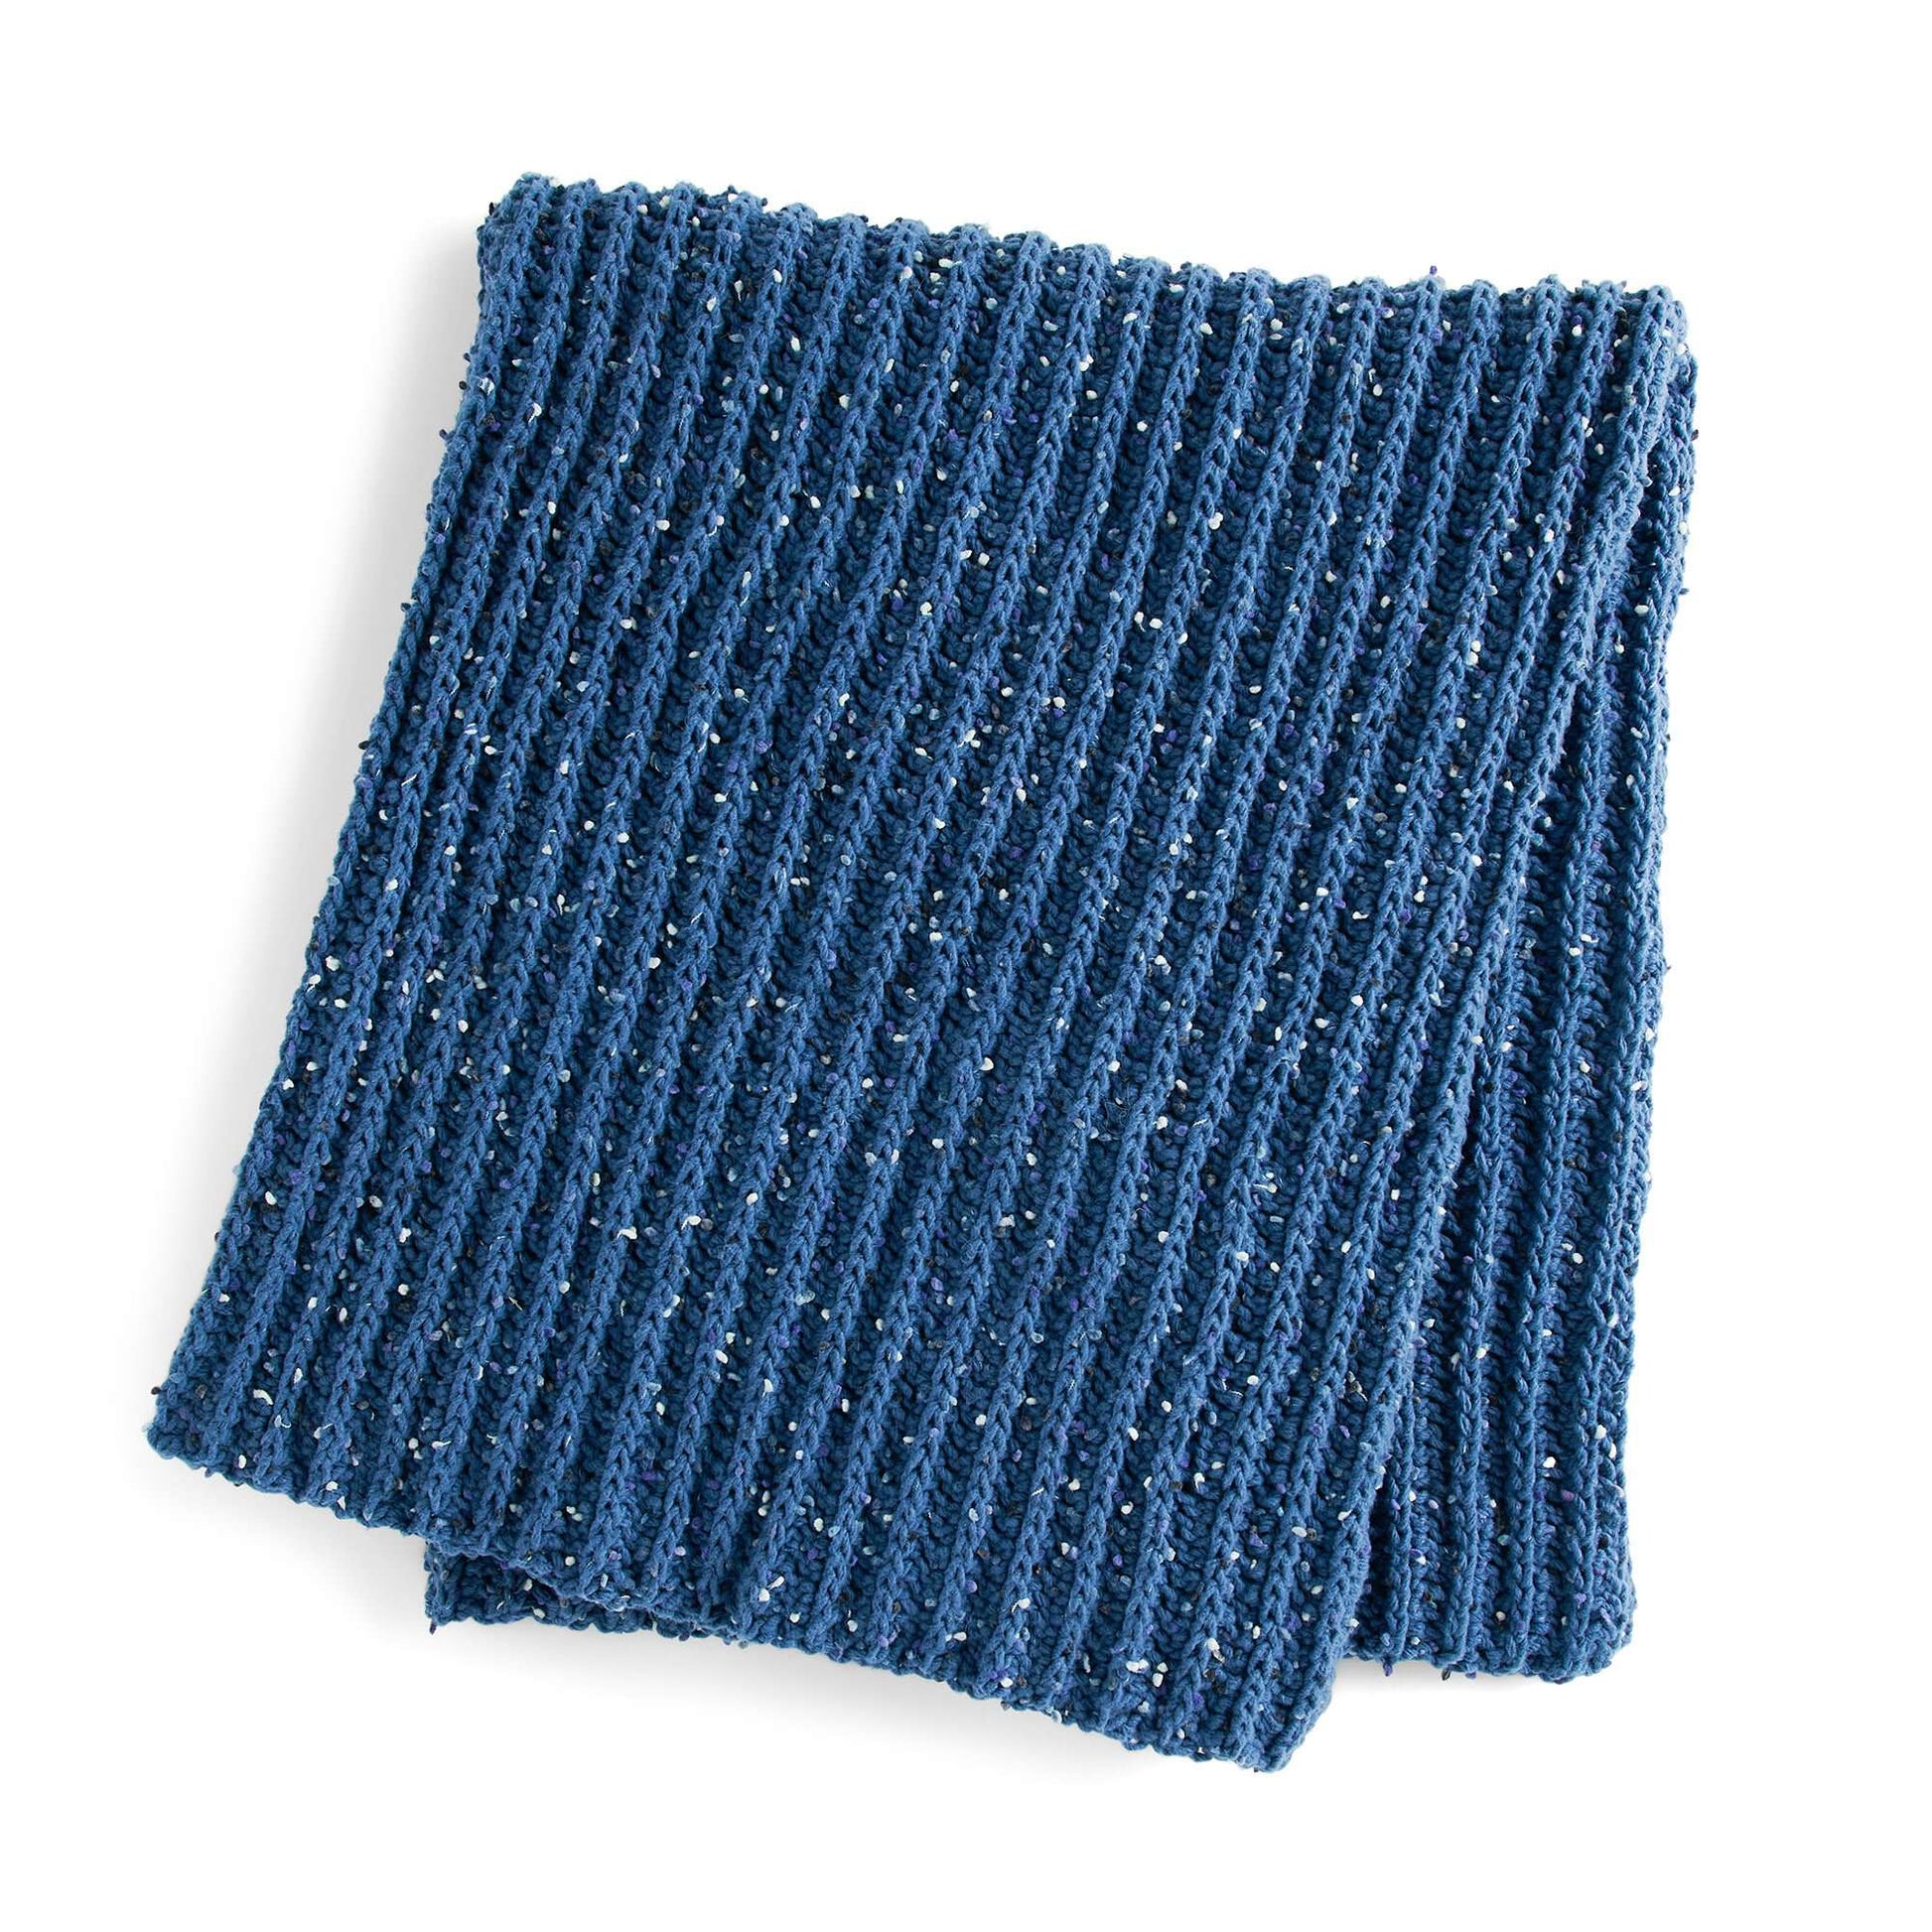 Crochet blanket bernat forever fleece Gentle wash, dry low heat